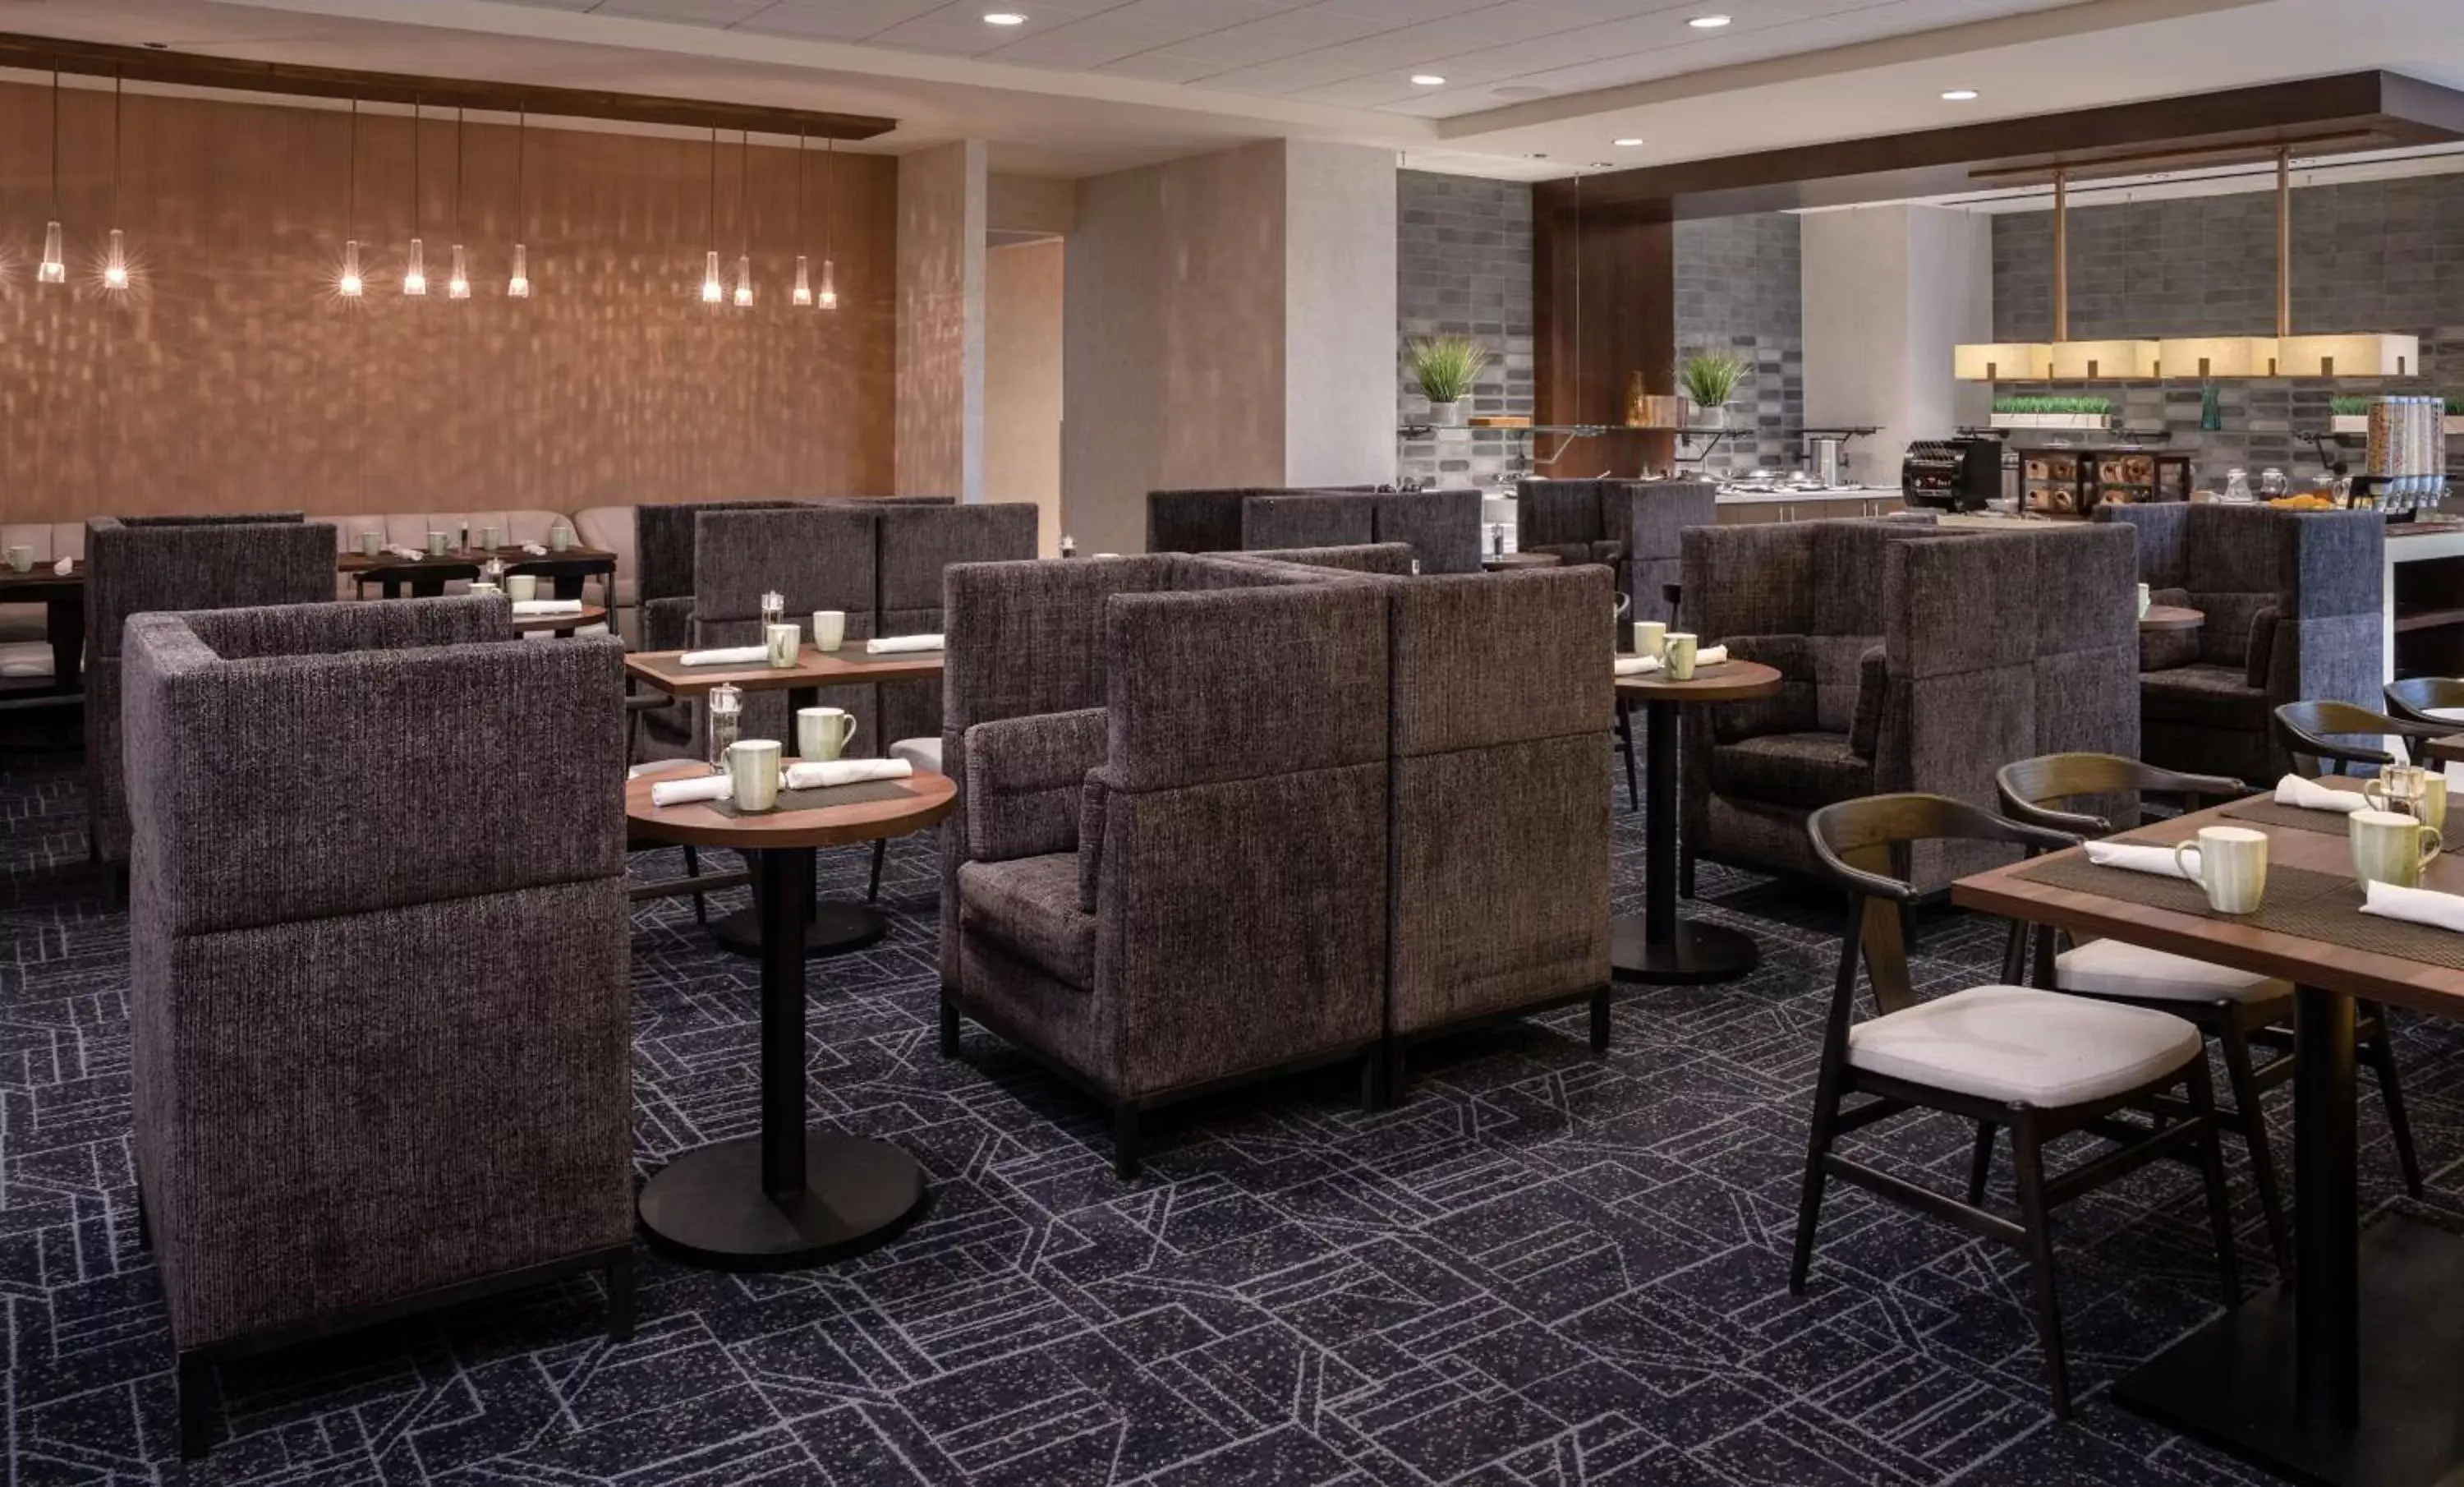 Restaurant/places to eat, Lounge/Bar in Hilton Fairfax, Va